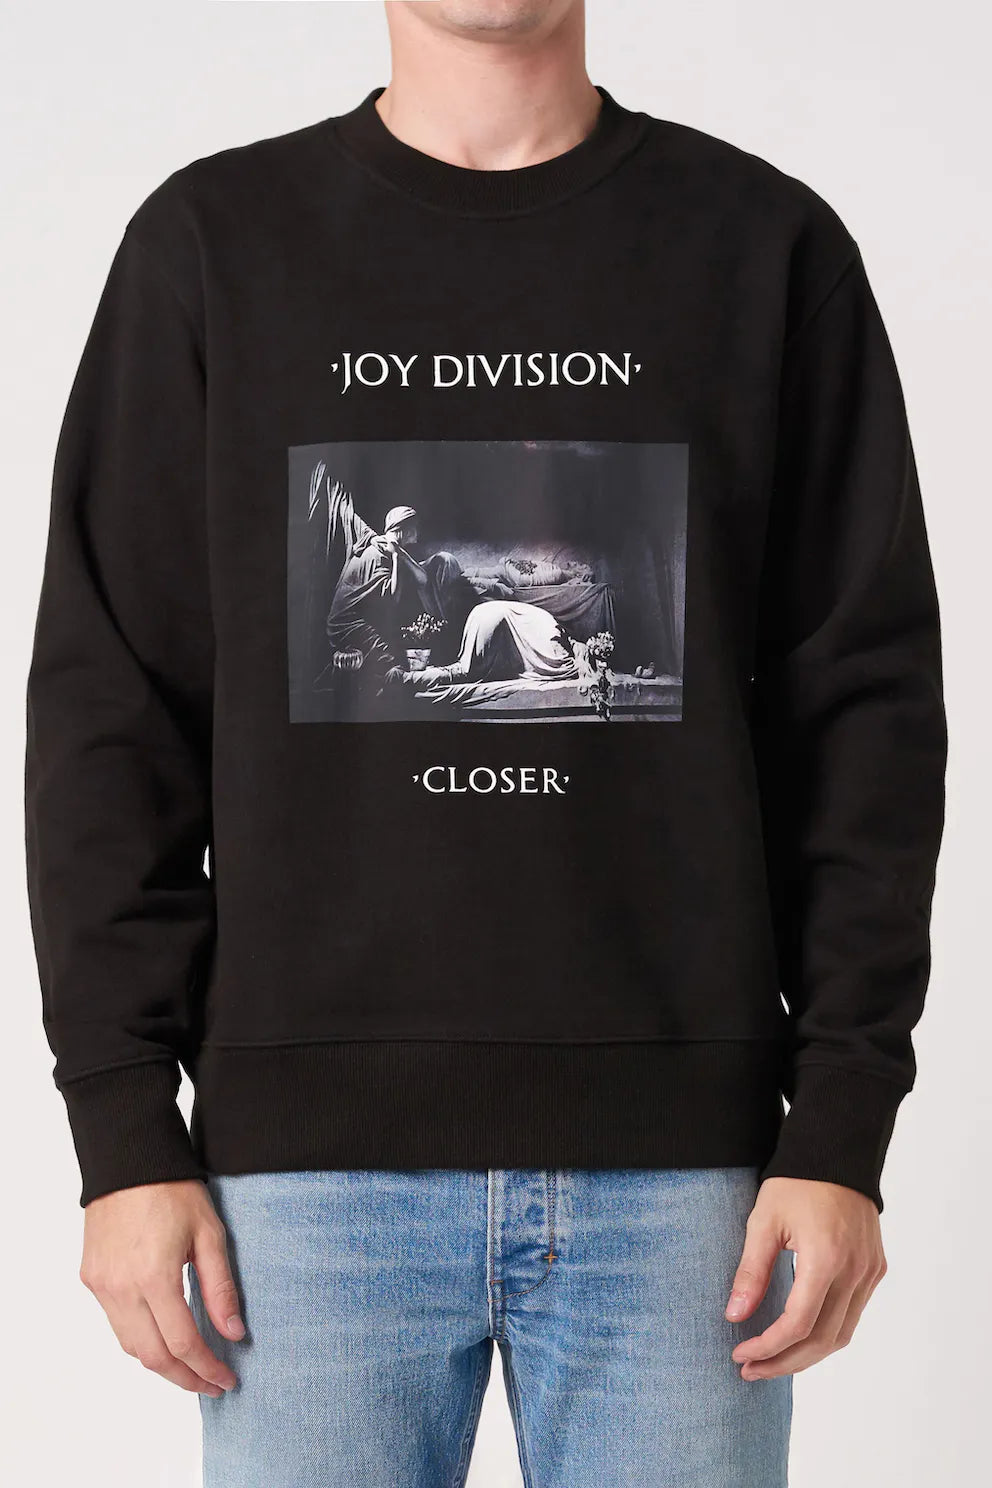 Joy Division Closer Crew - Jet Black